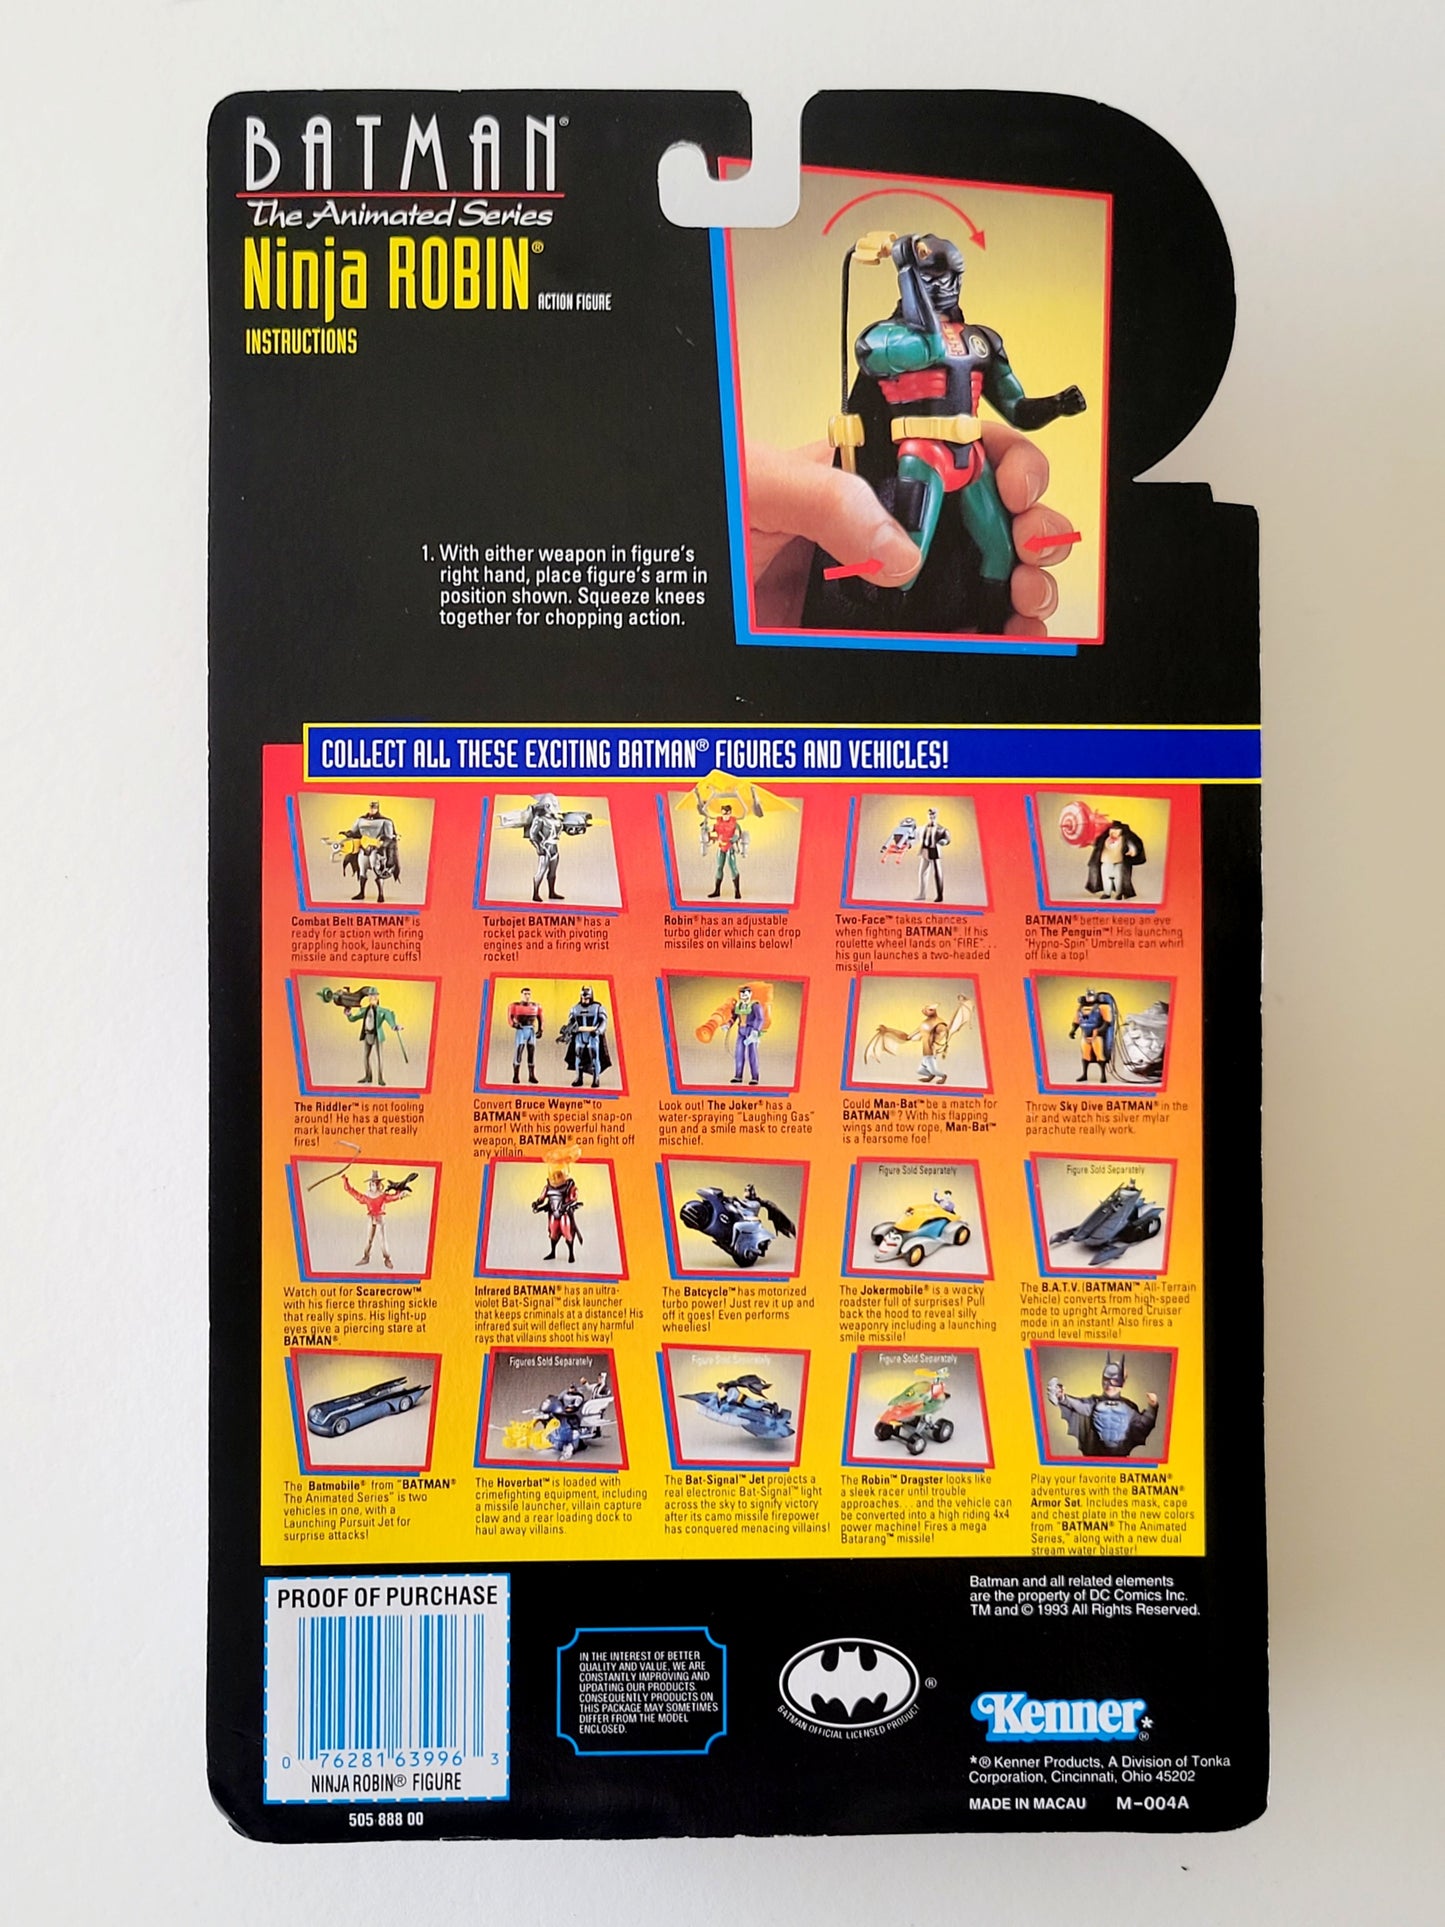 Ninja Robin Action Figure from Batman: The Animated Series